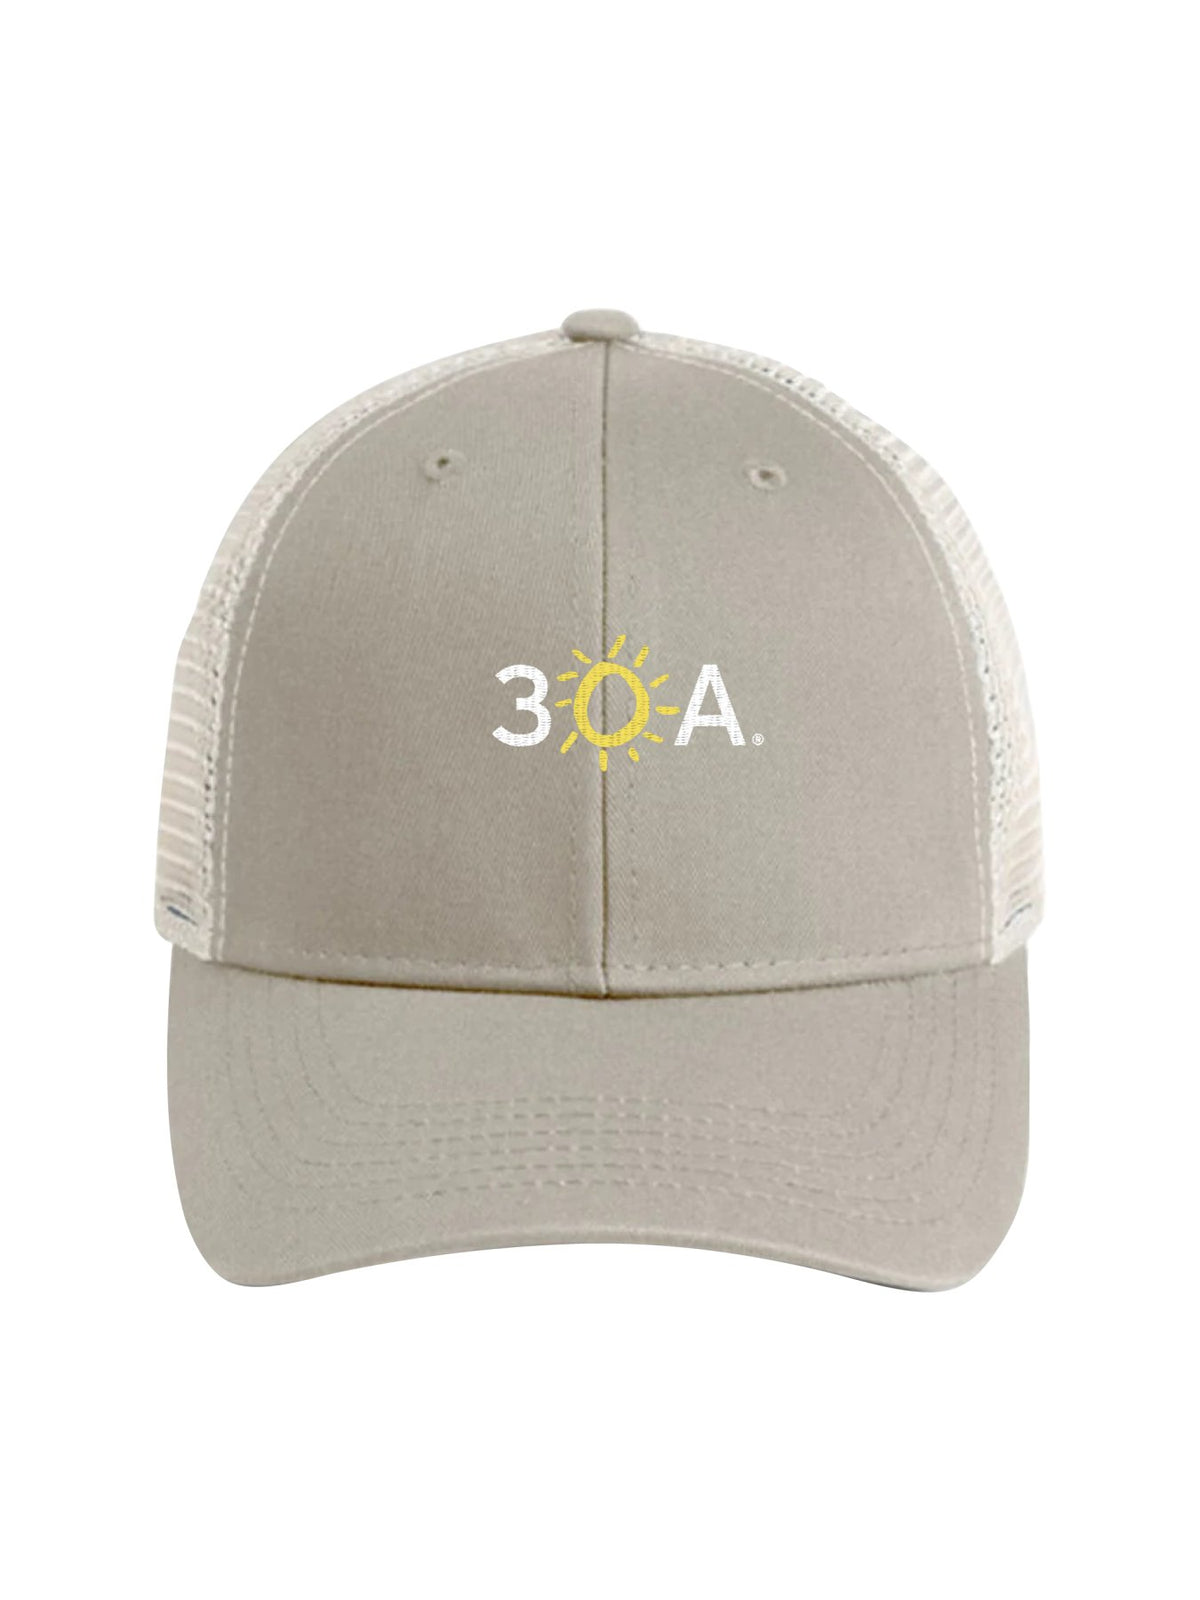 30A Wordmark Beach Happy Trucker Hat - 30A Gear - caps adjustable